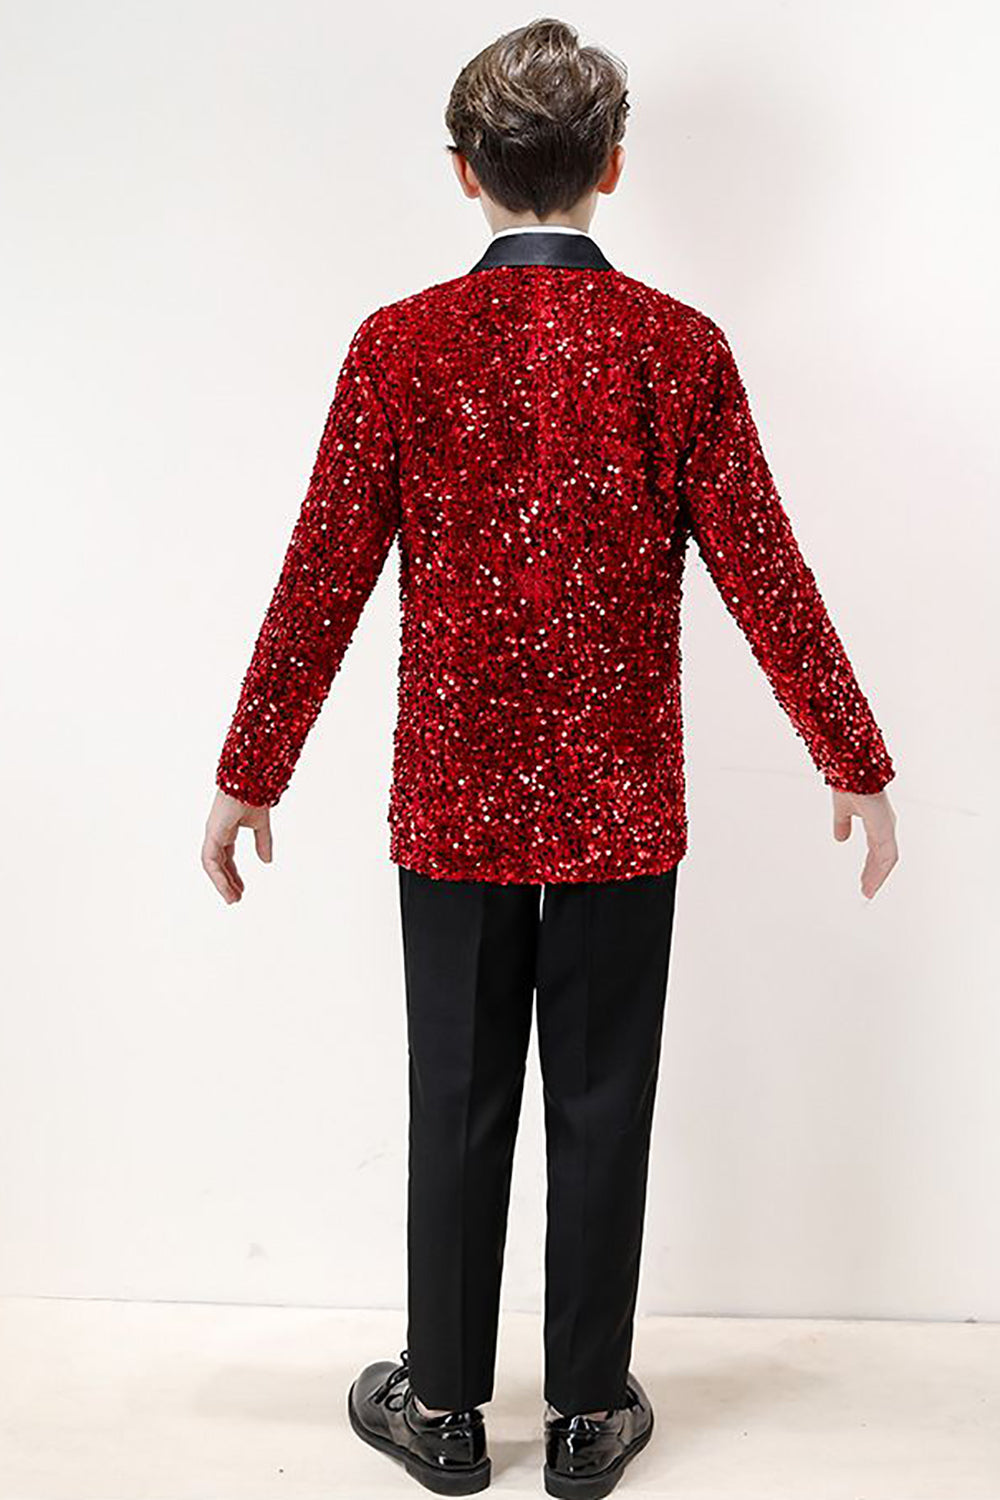 Sparkly Red Sequins Boys' 3-Piece Formal Suit Set